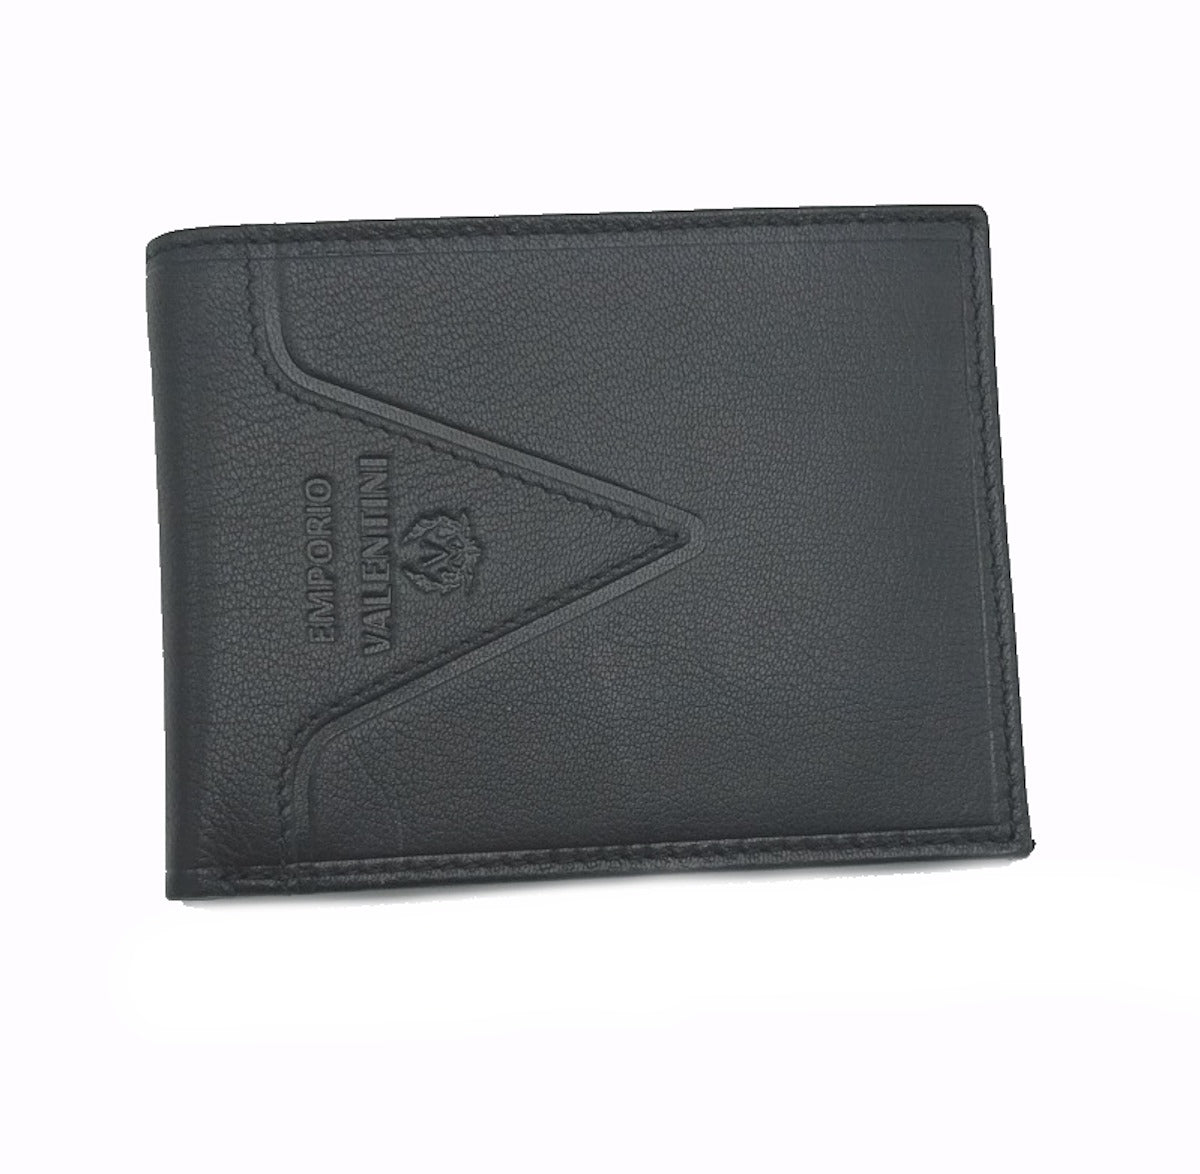 Genuine leather wallet, Emporio Valentini, for men, art. 7872